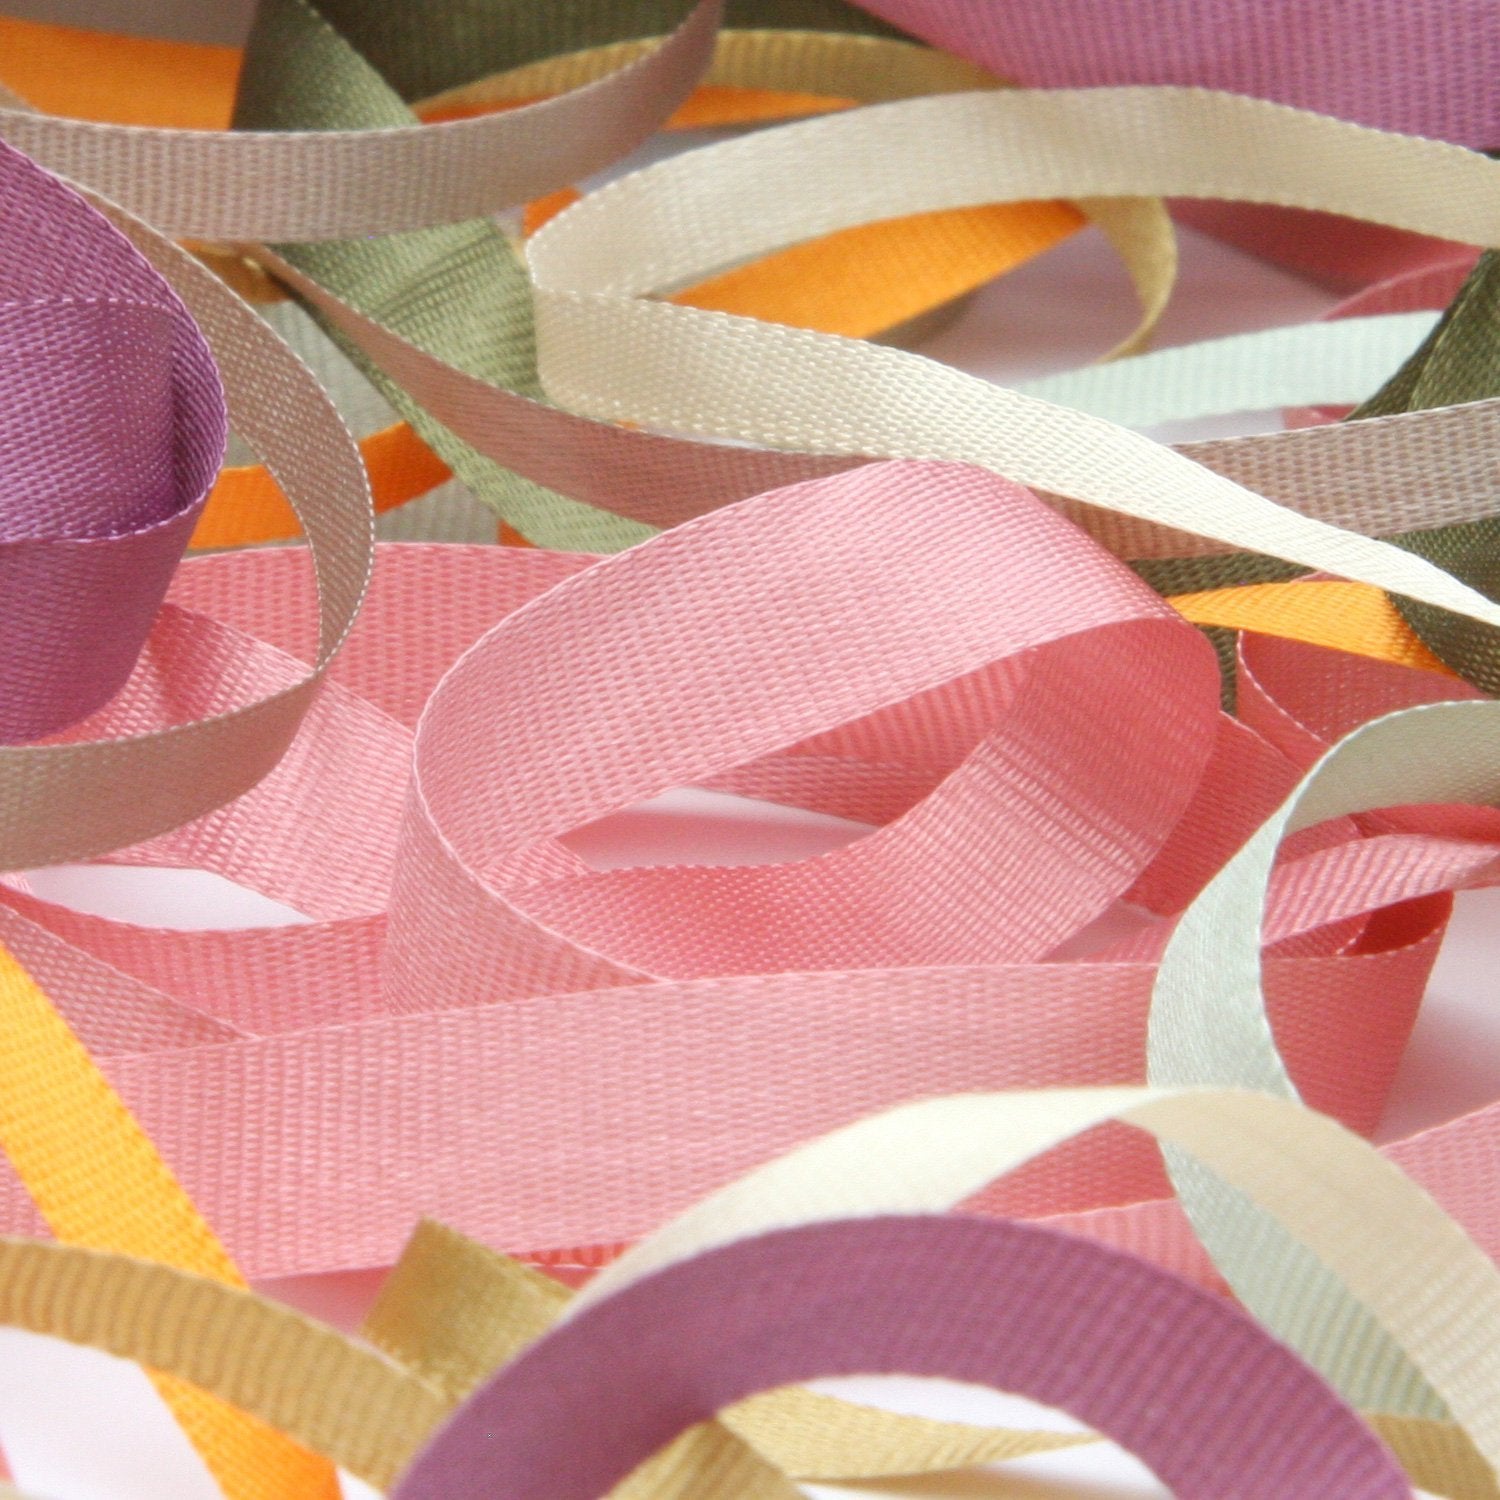 FUJIYAMA RIBBON [Wholesale] Embroidery Ribbon 3.5mm 200 Meters Roll